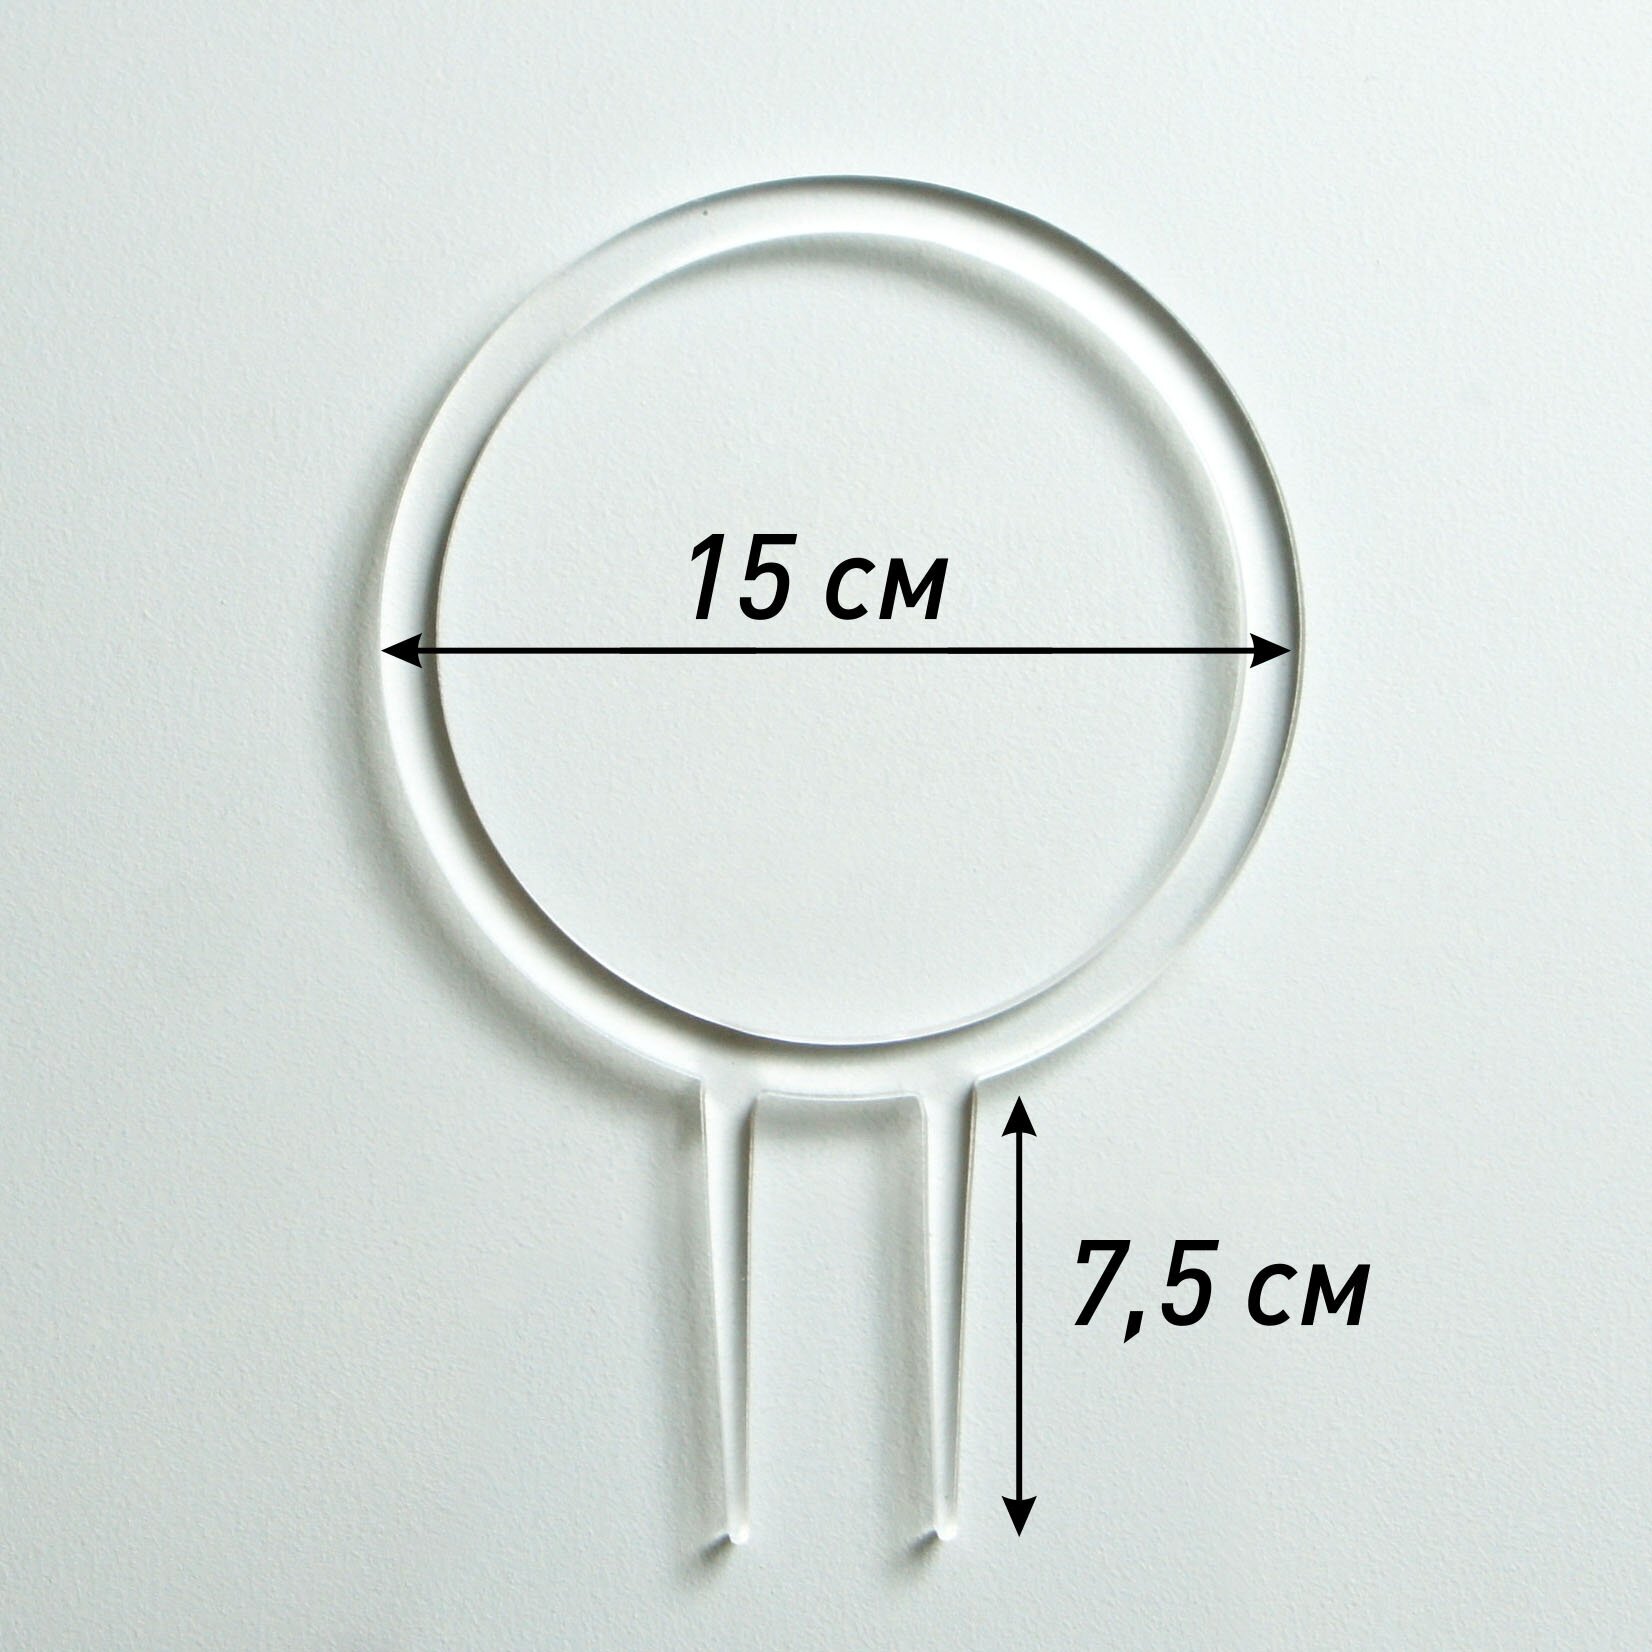 Опора для растений Circle, прозрачная, диаметр 15 см - фотография № 2